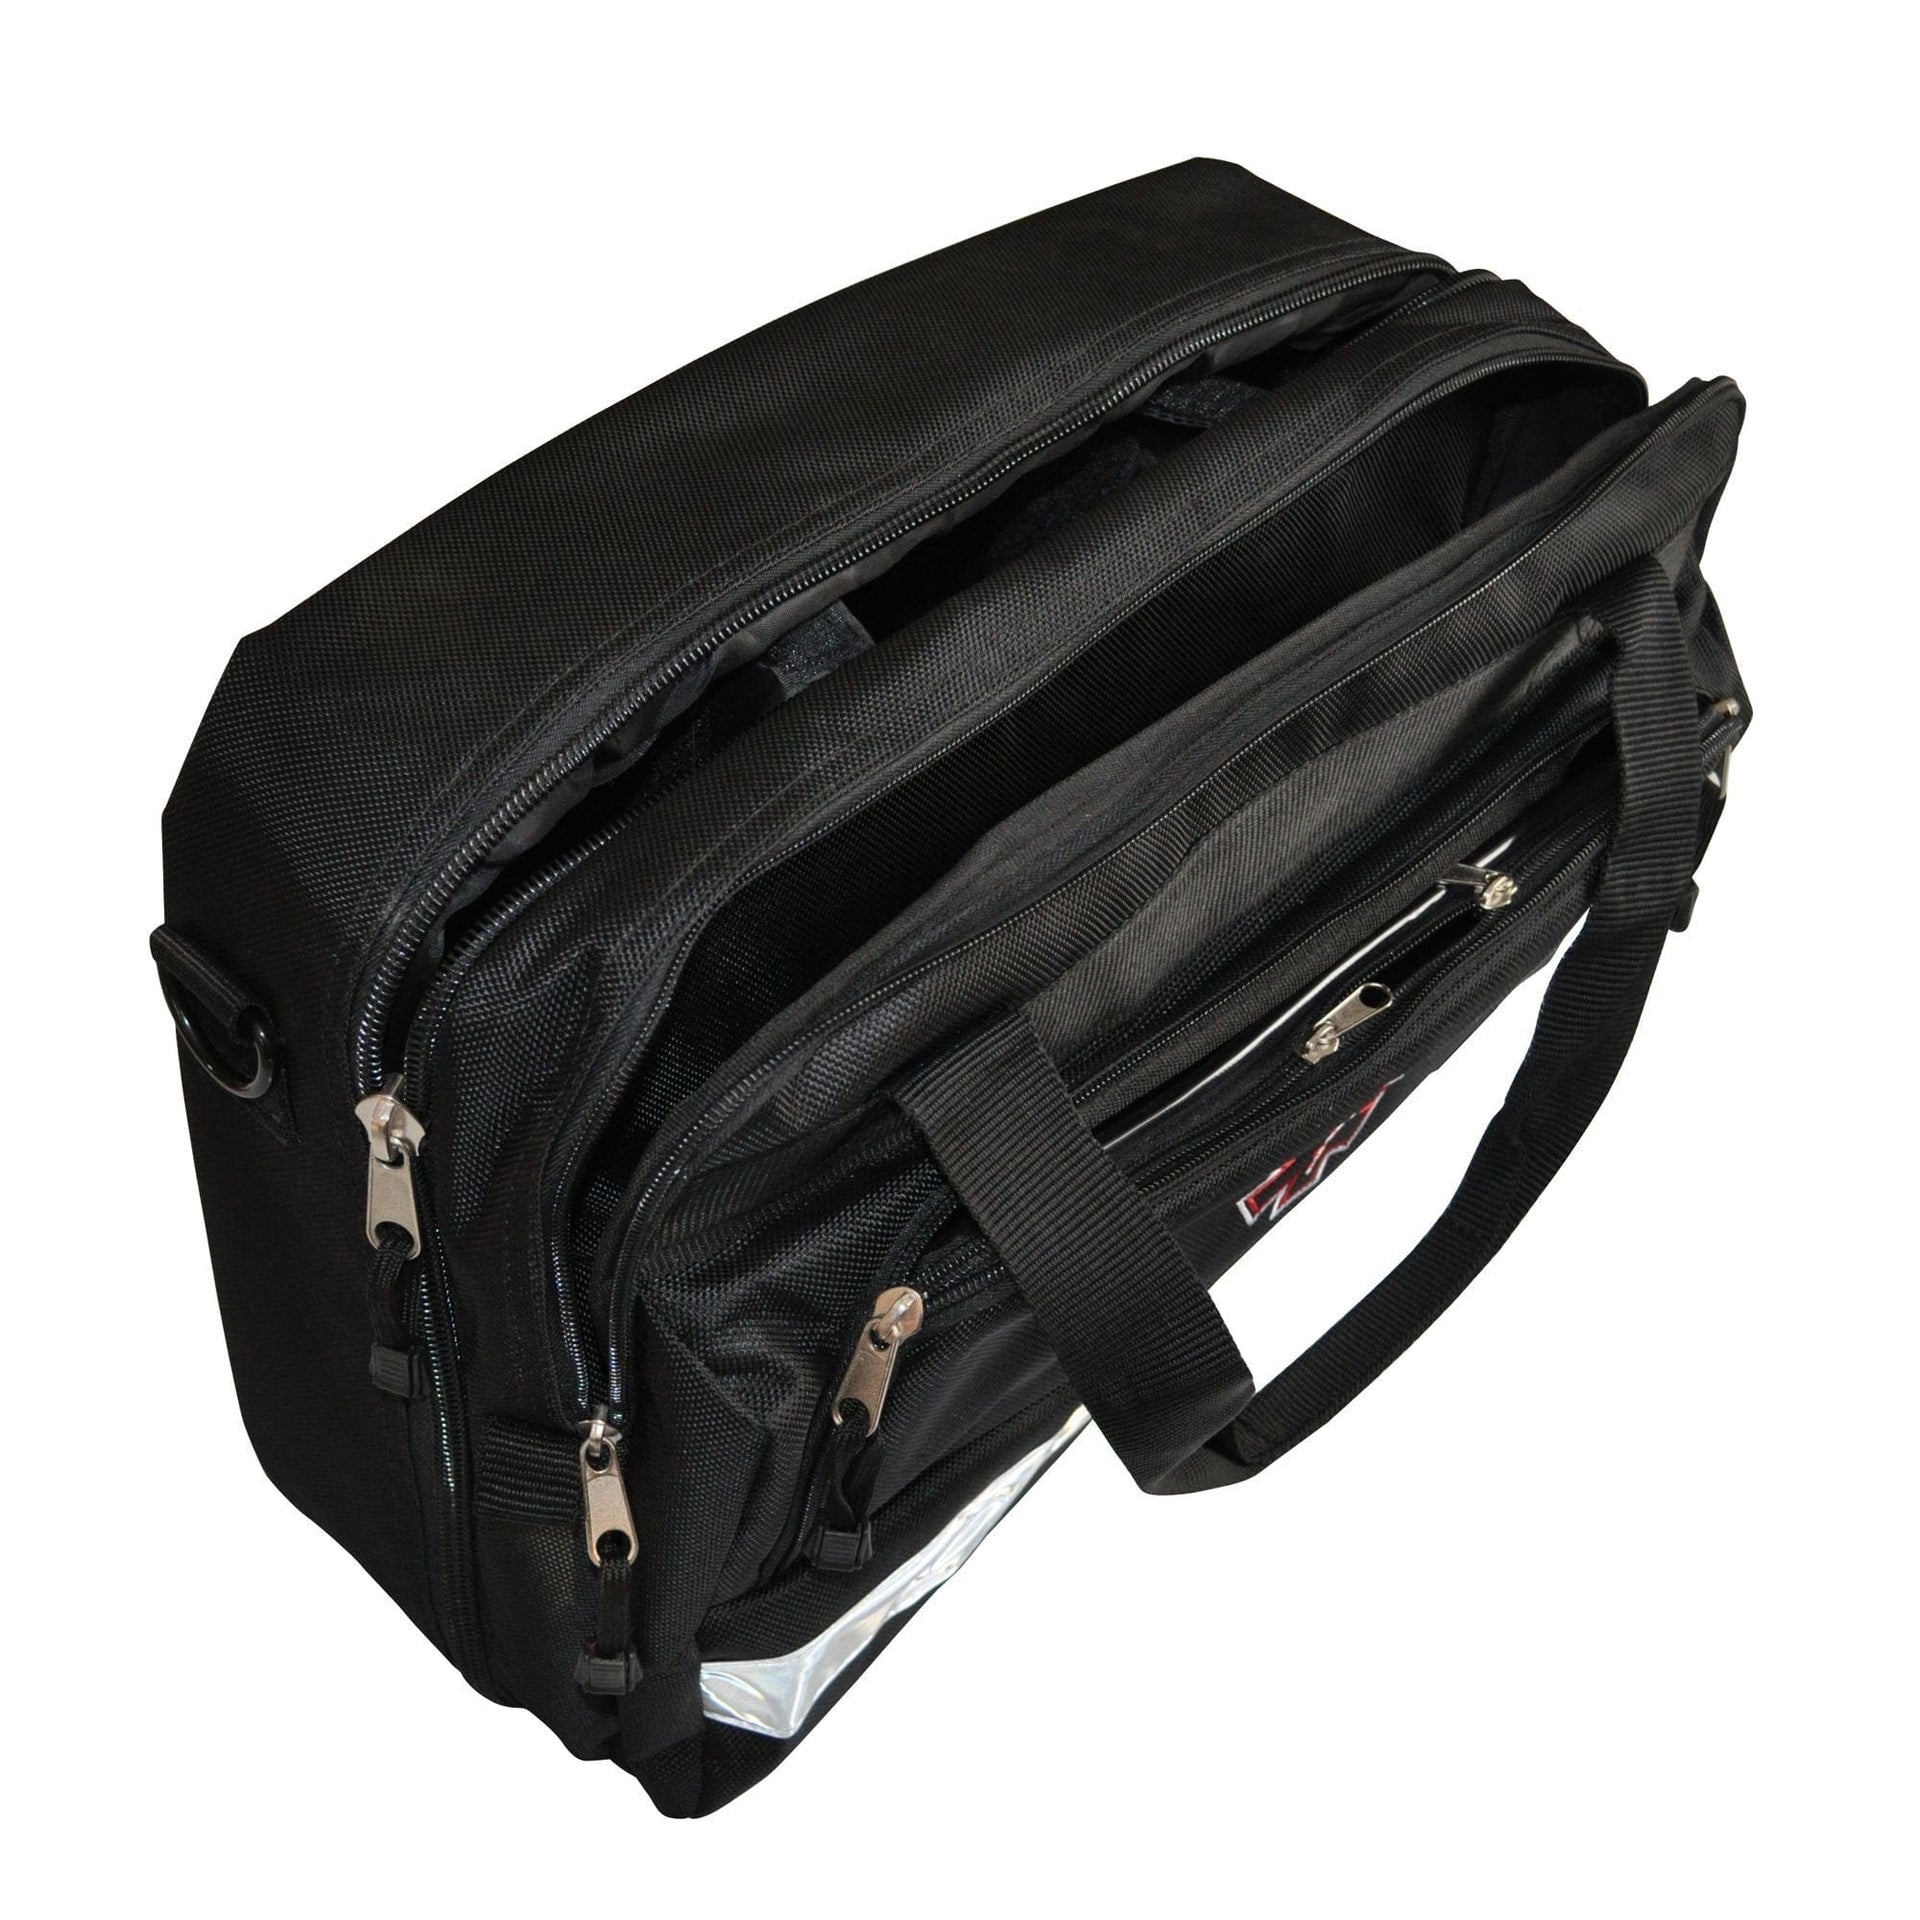 Paramedic Shop Add-Tech Pty Ltd Pouch Medbrief Trauma Carry Bag - BAG ONLY